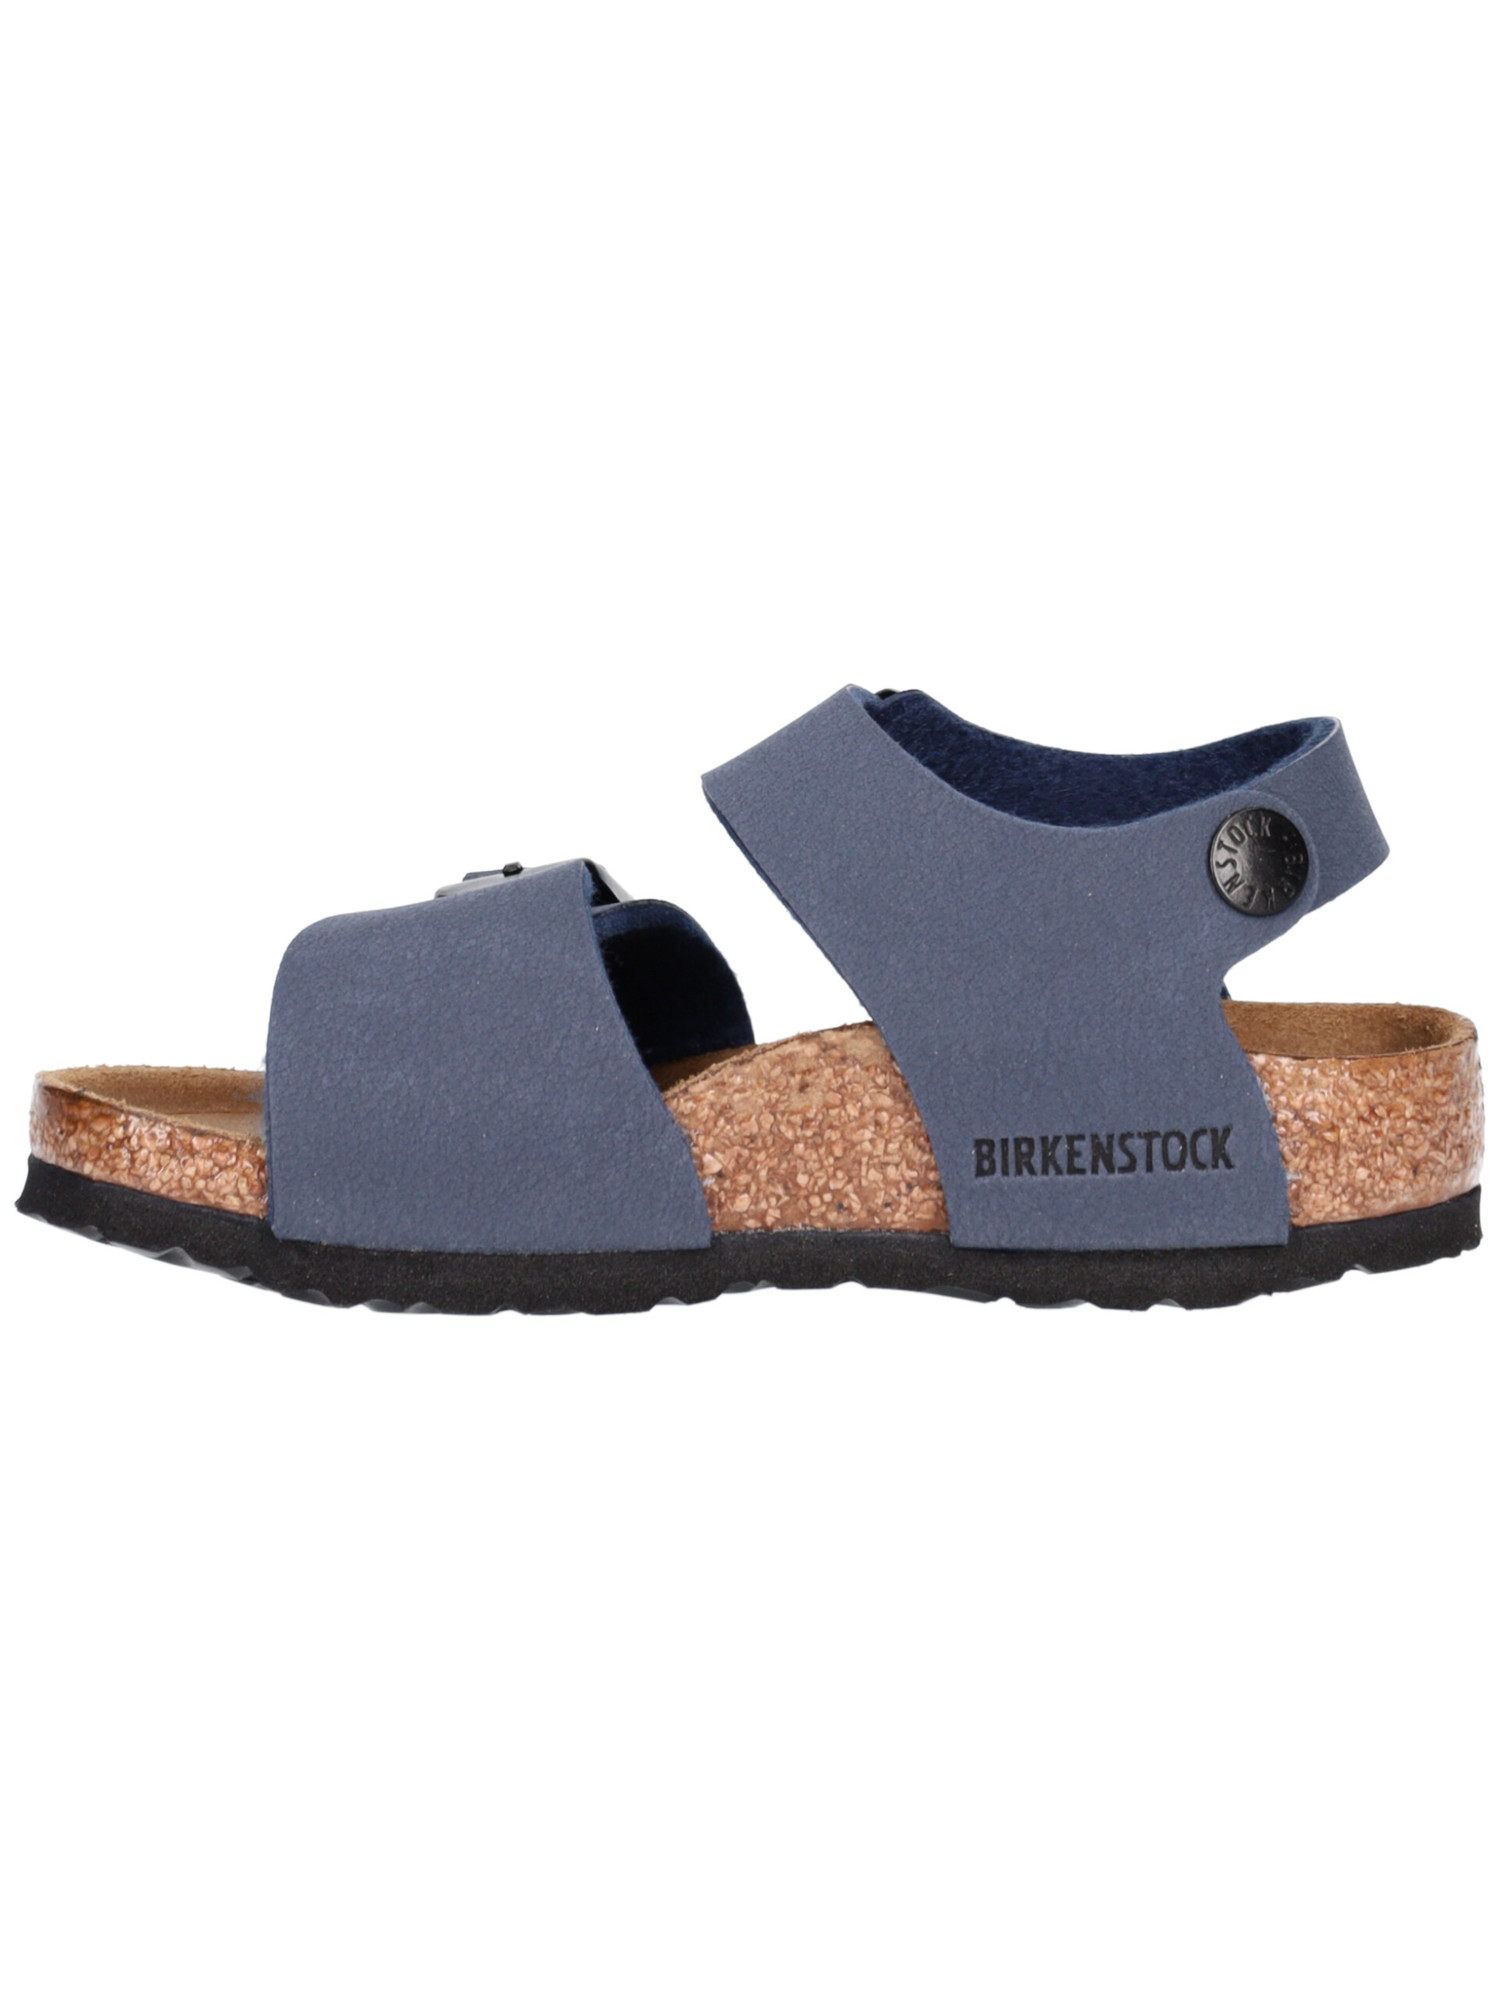 sandalo-birkenstock-bambino-blu